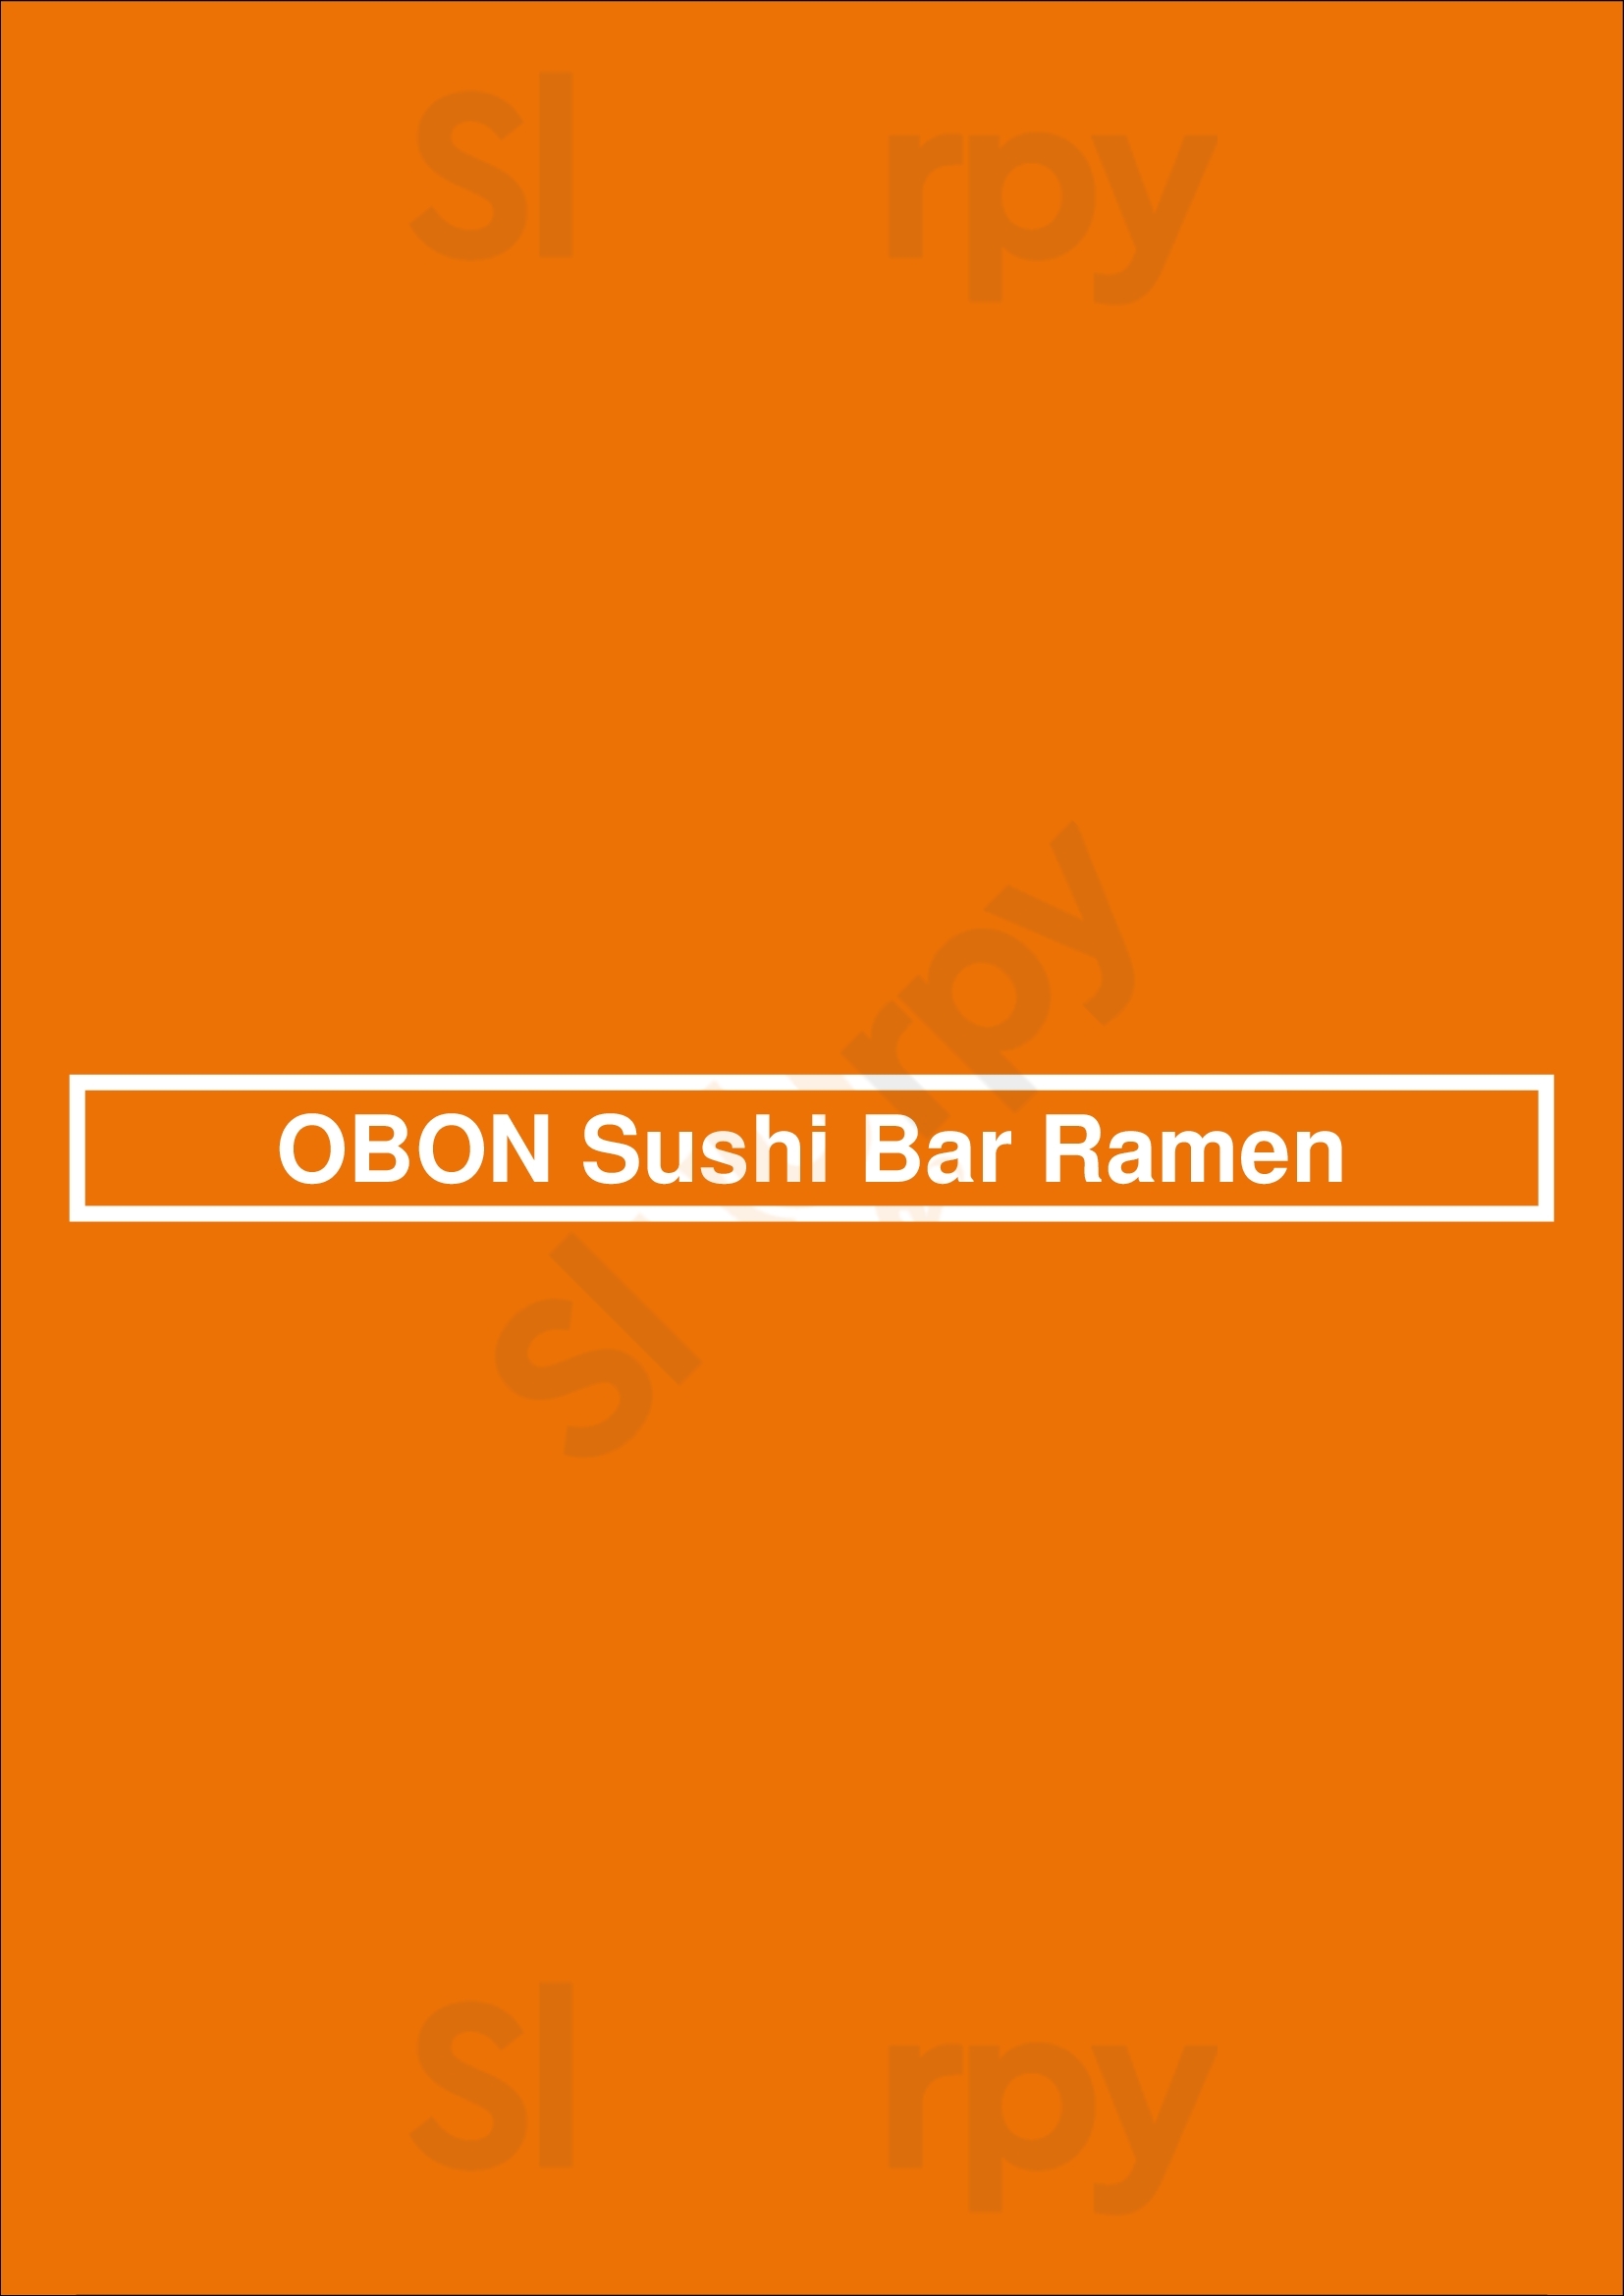 Obon Sushi Bar Ramen Scottsdale Menu - 1